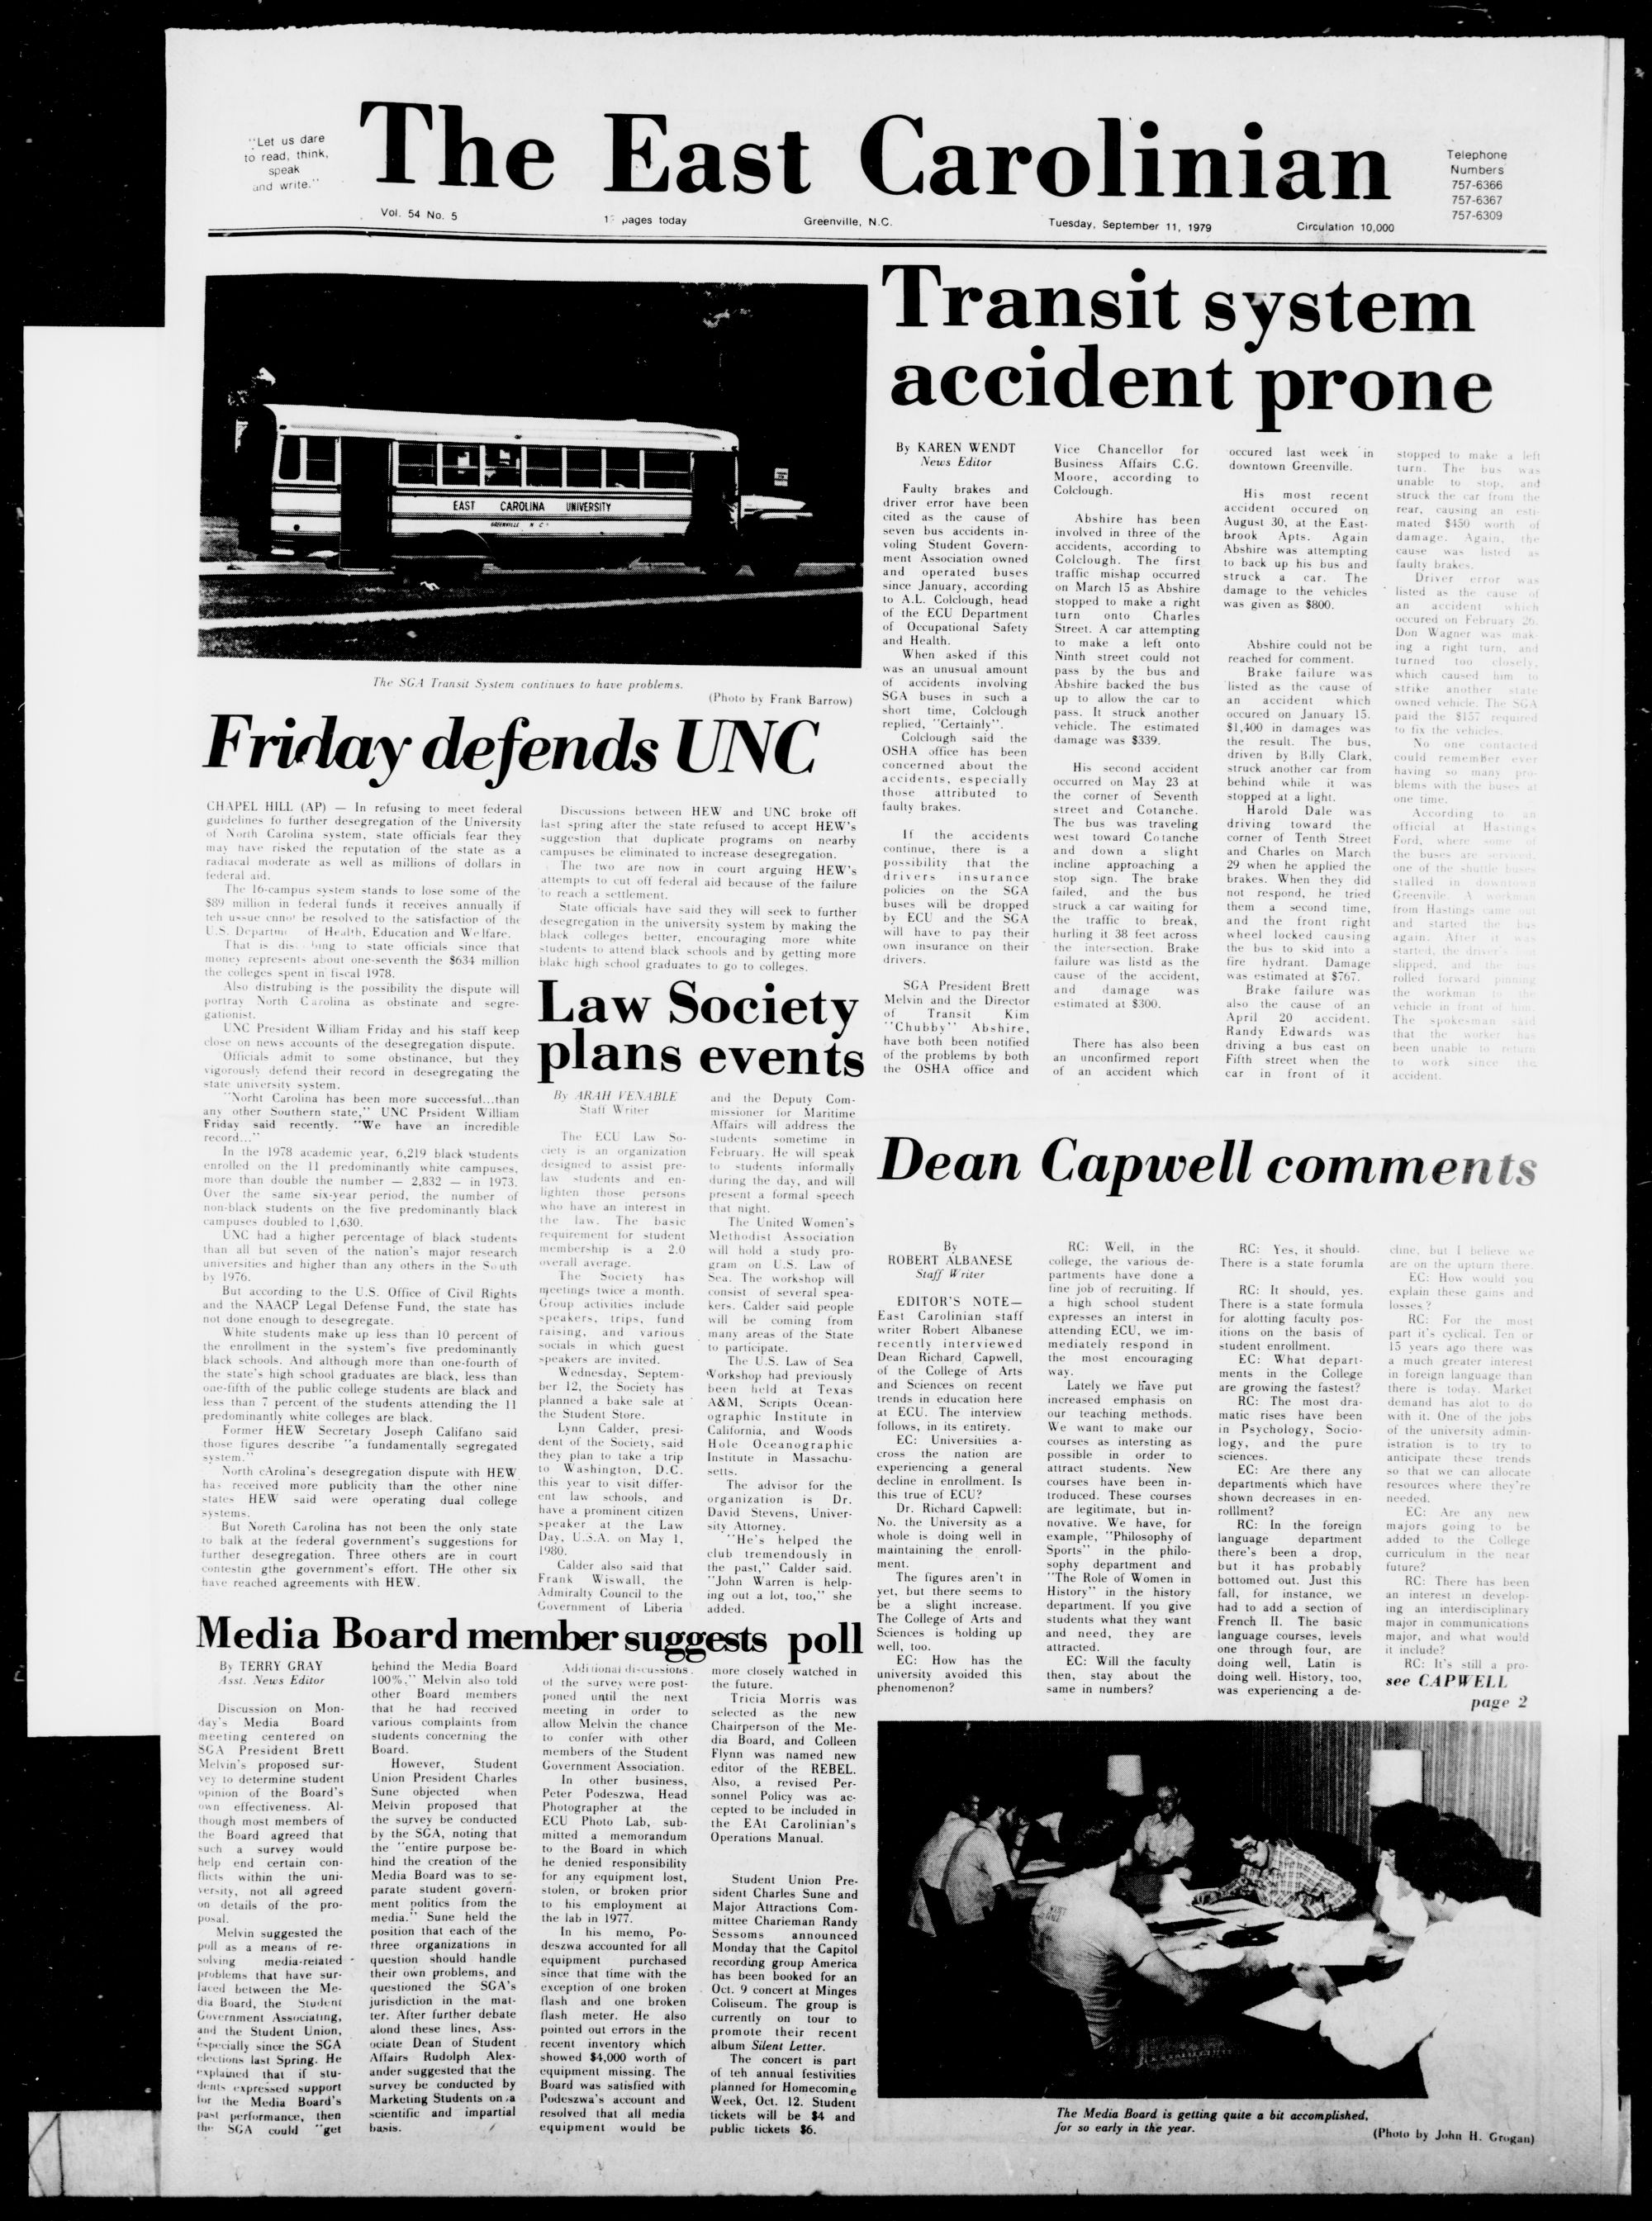 The East Carolinian, September 11, 1979 image pic